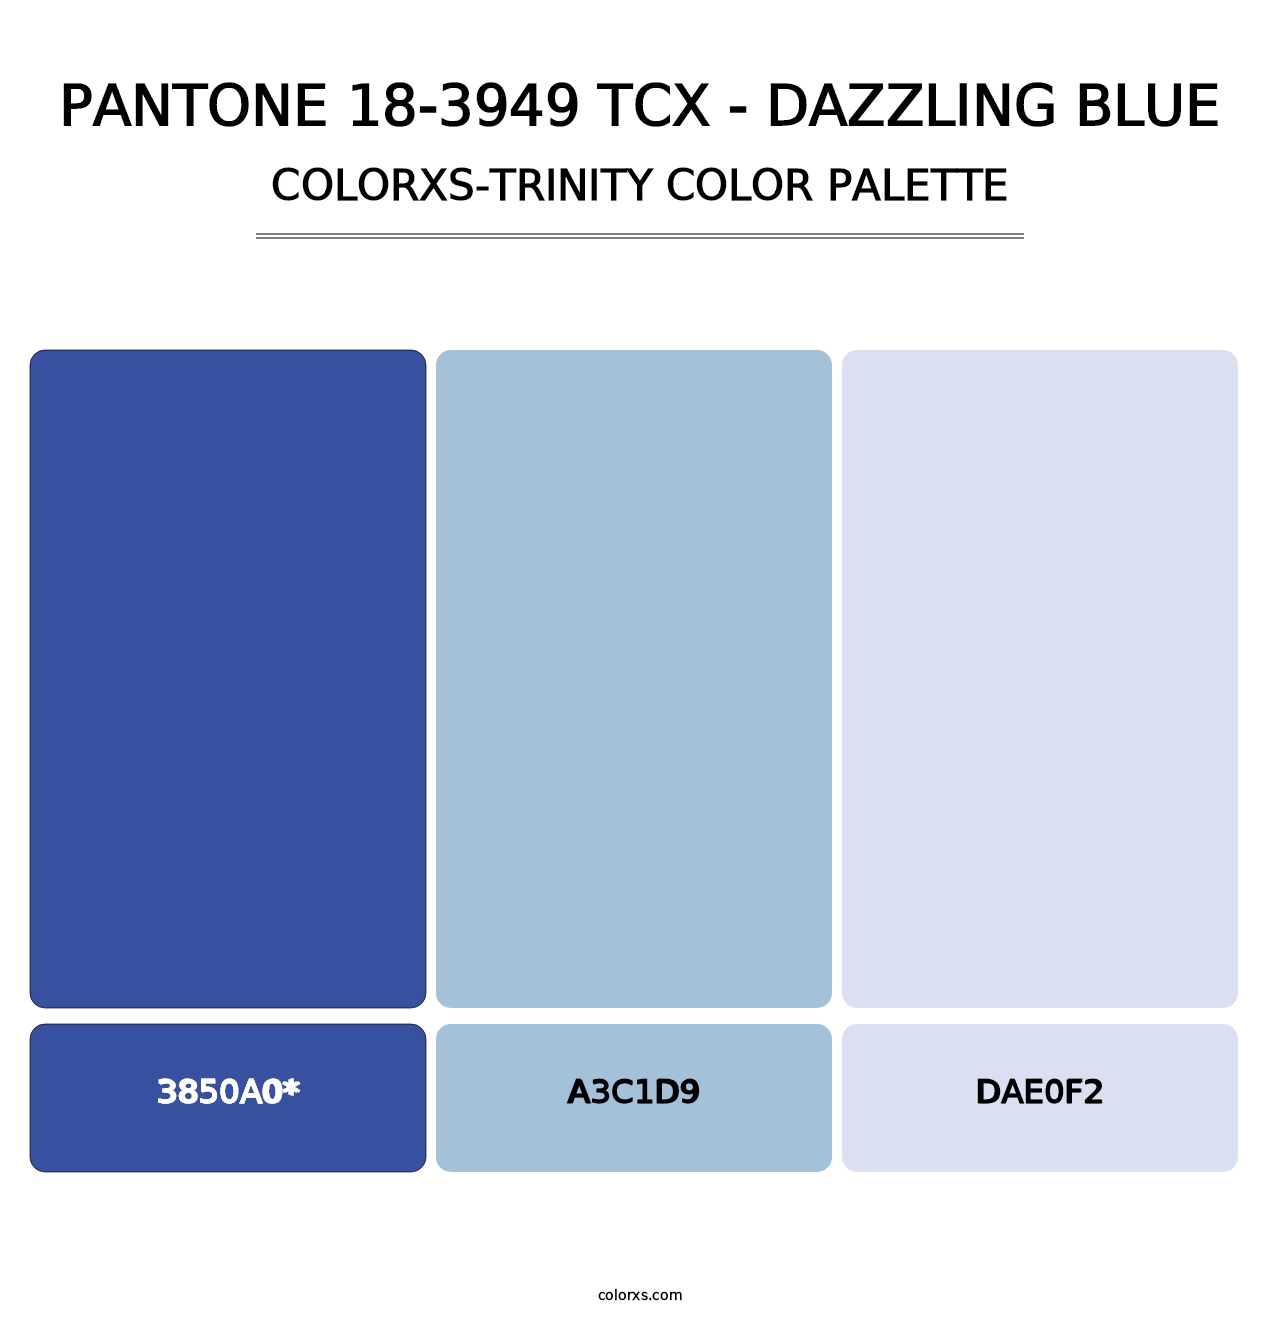 PANTONE 18-3949 TCX - Dazzling Blue - Colorxs Trinity Palette